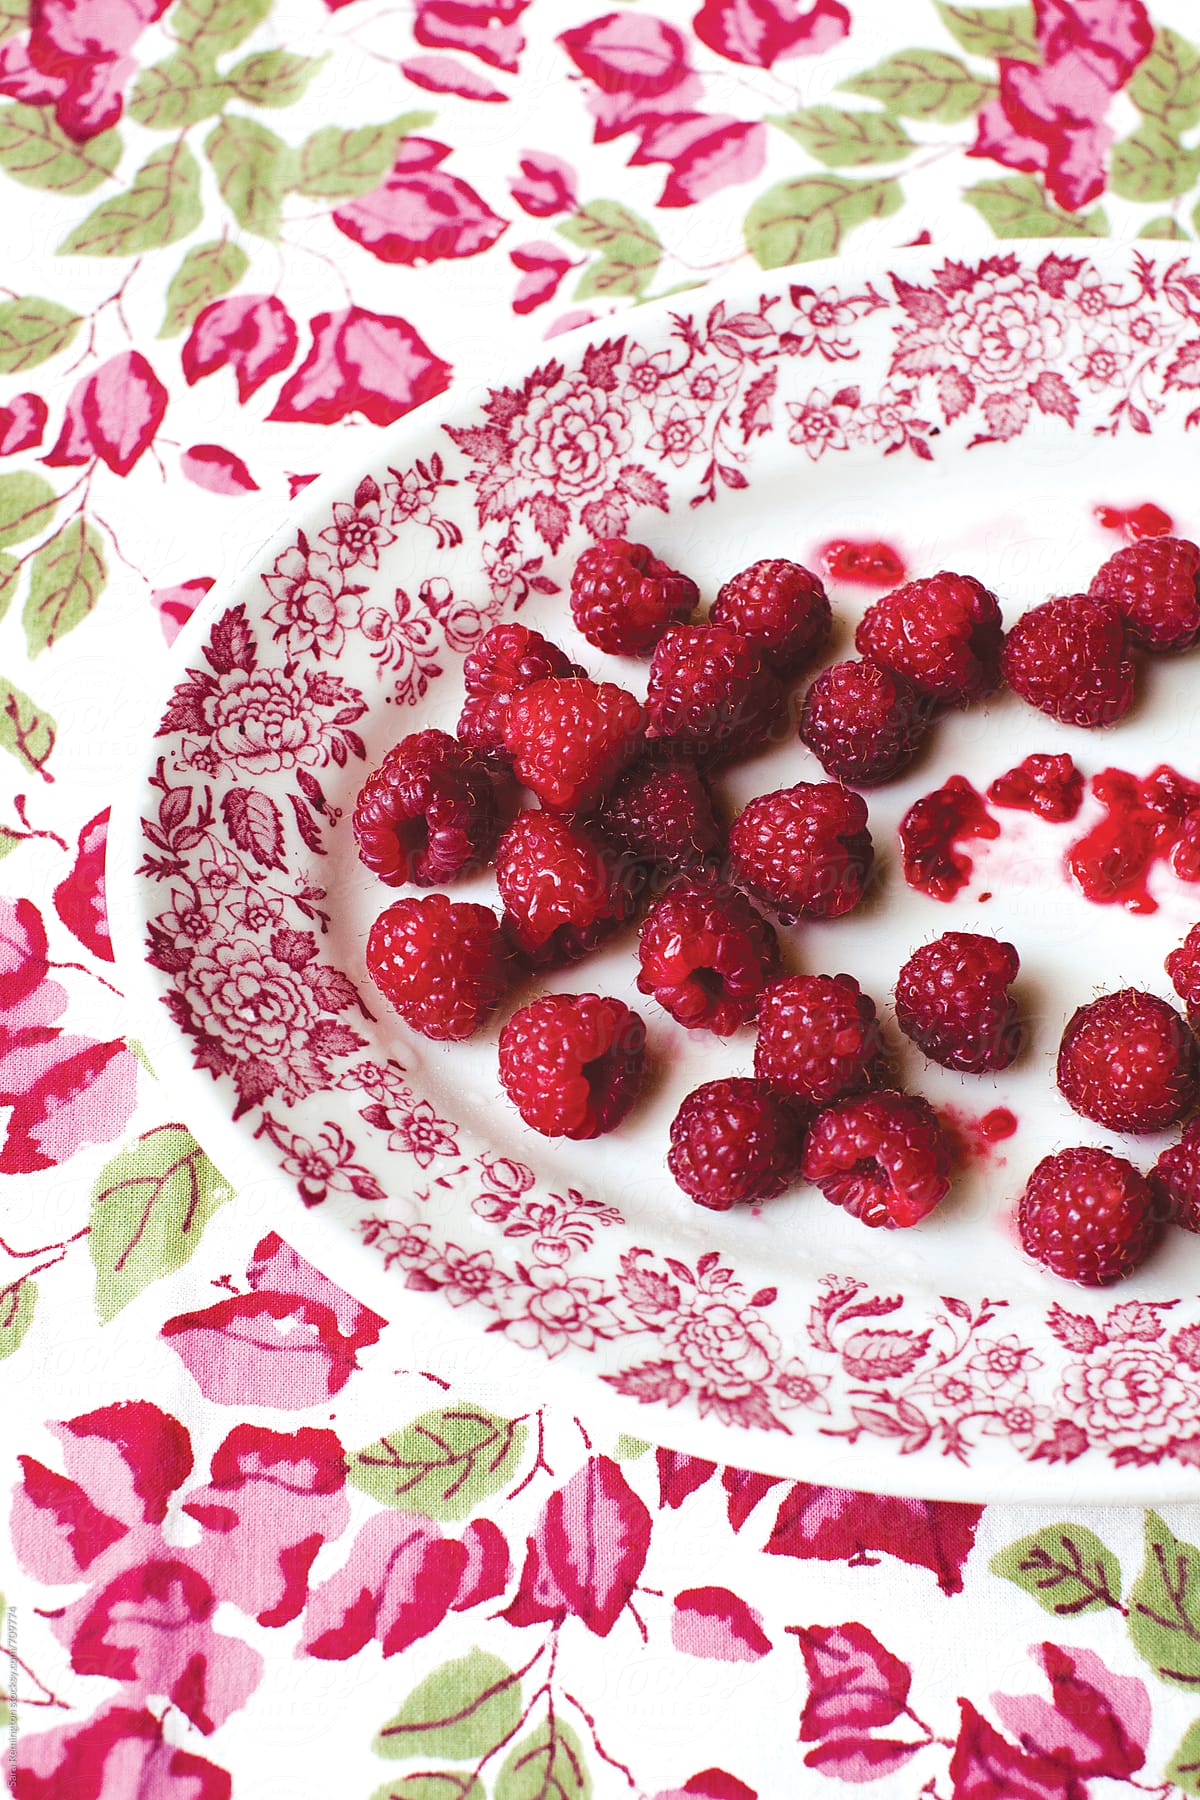 Organic Raspberries on Platter